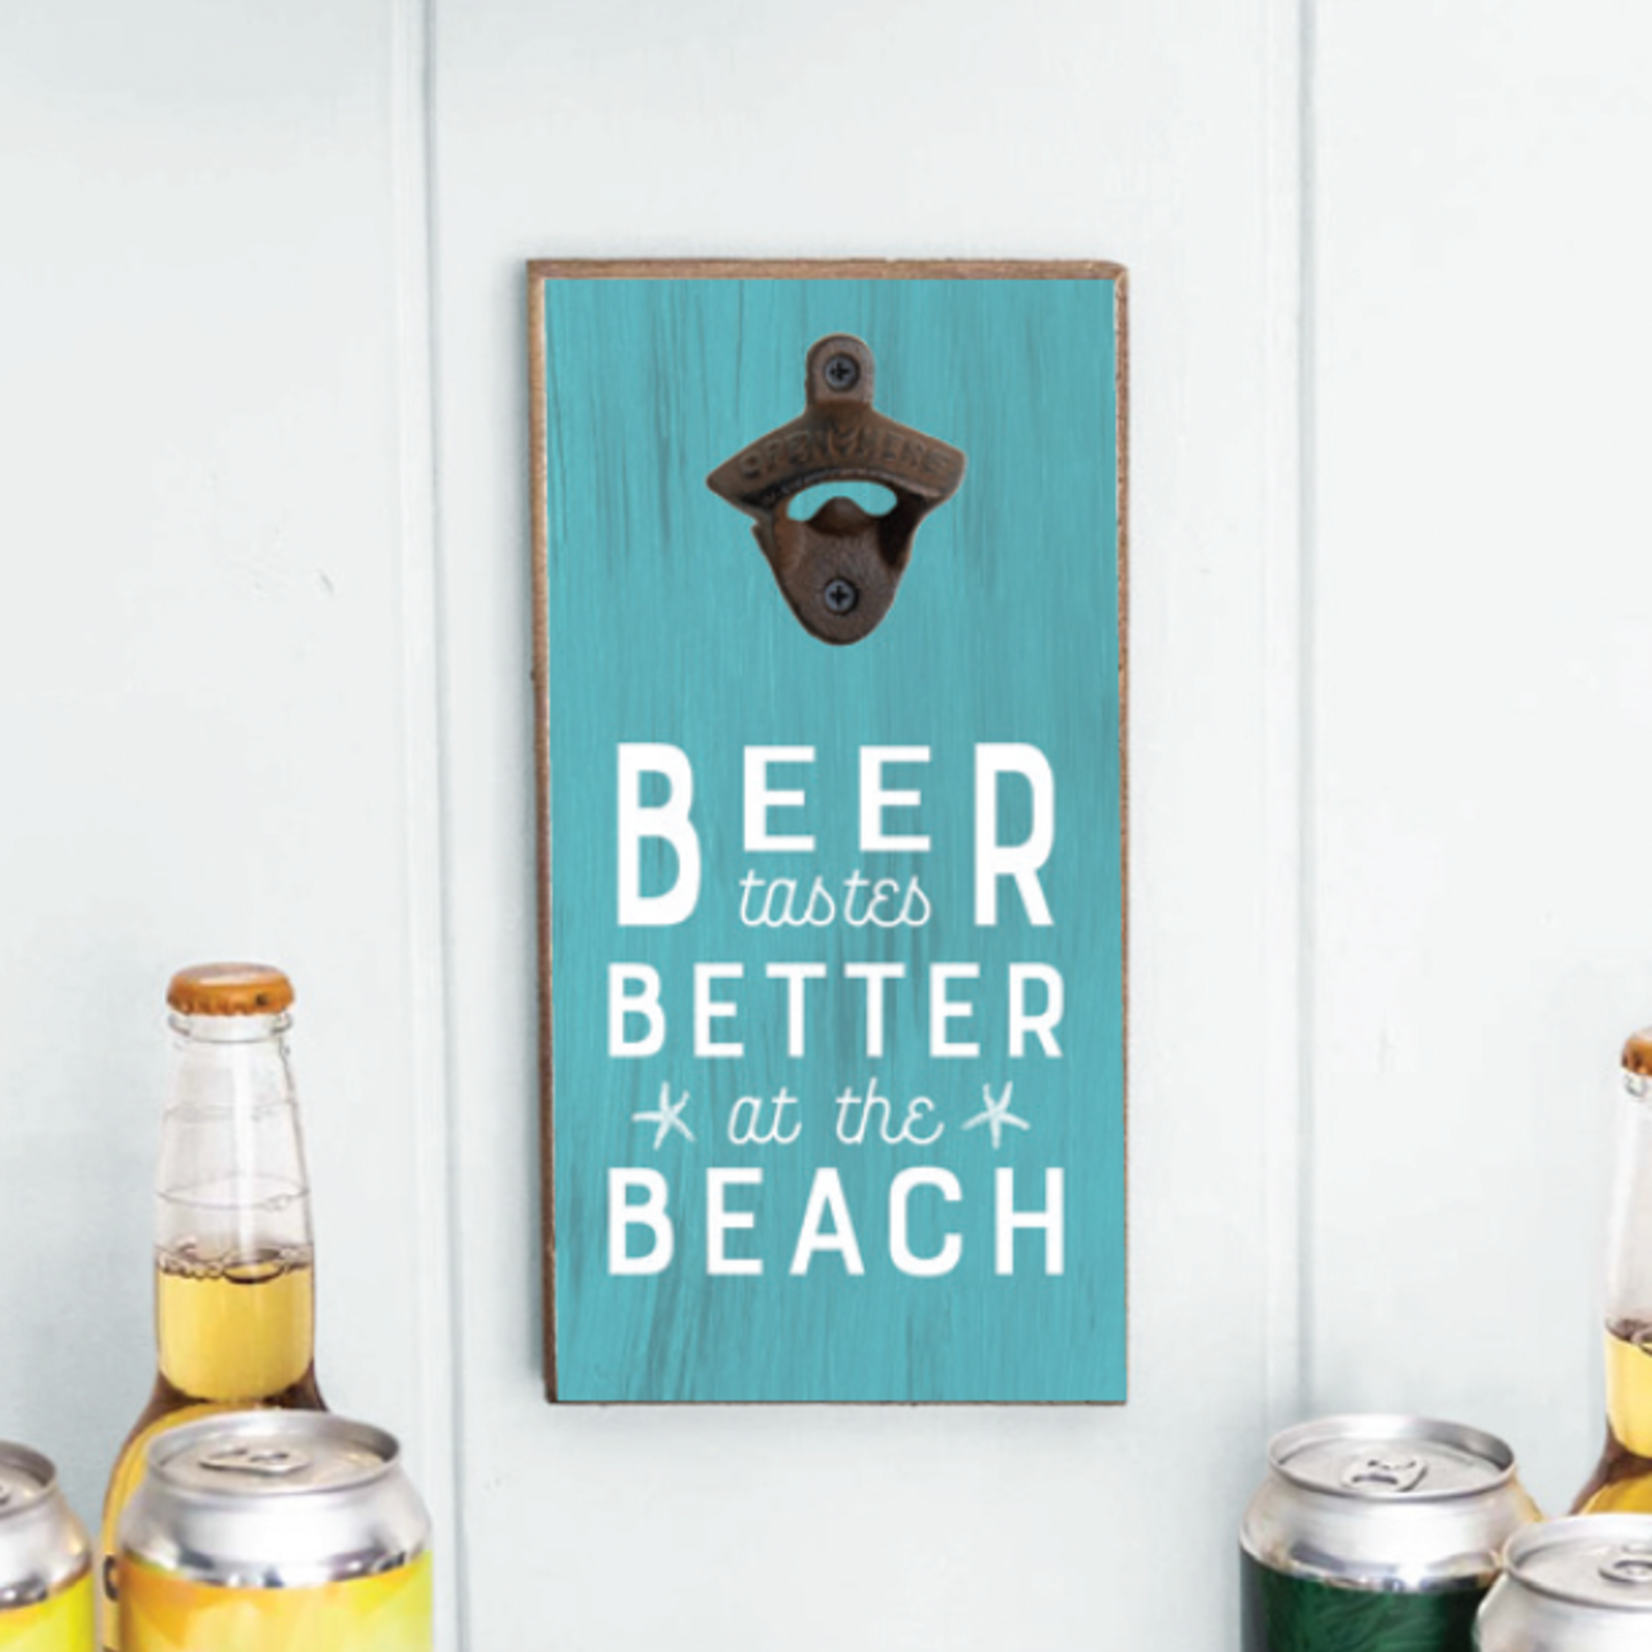 Rustic Marlin Rustic Marlin - Bottle Openers - Beer Tastes Better at the Beach